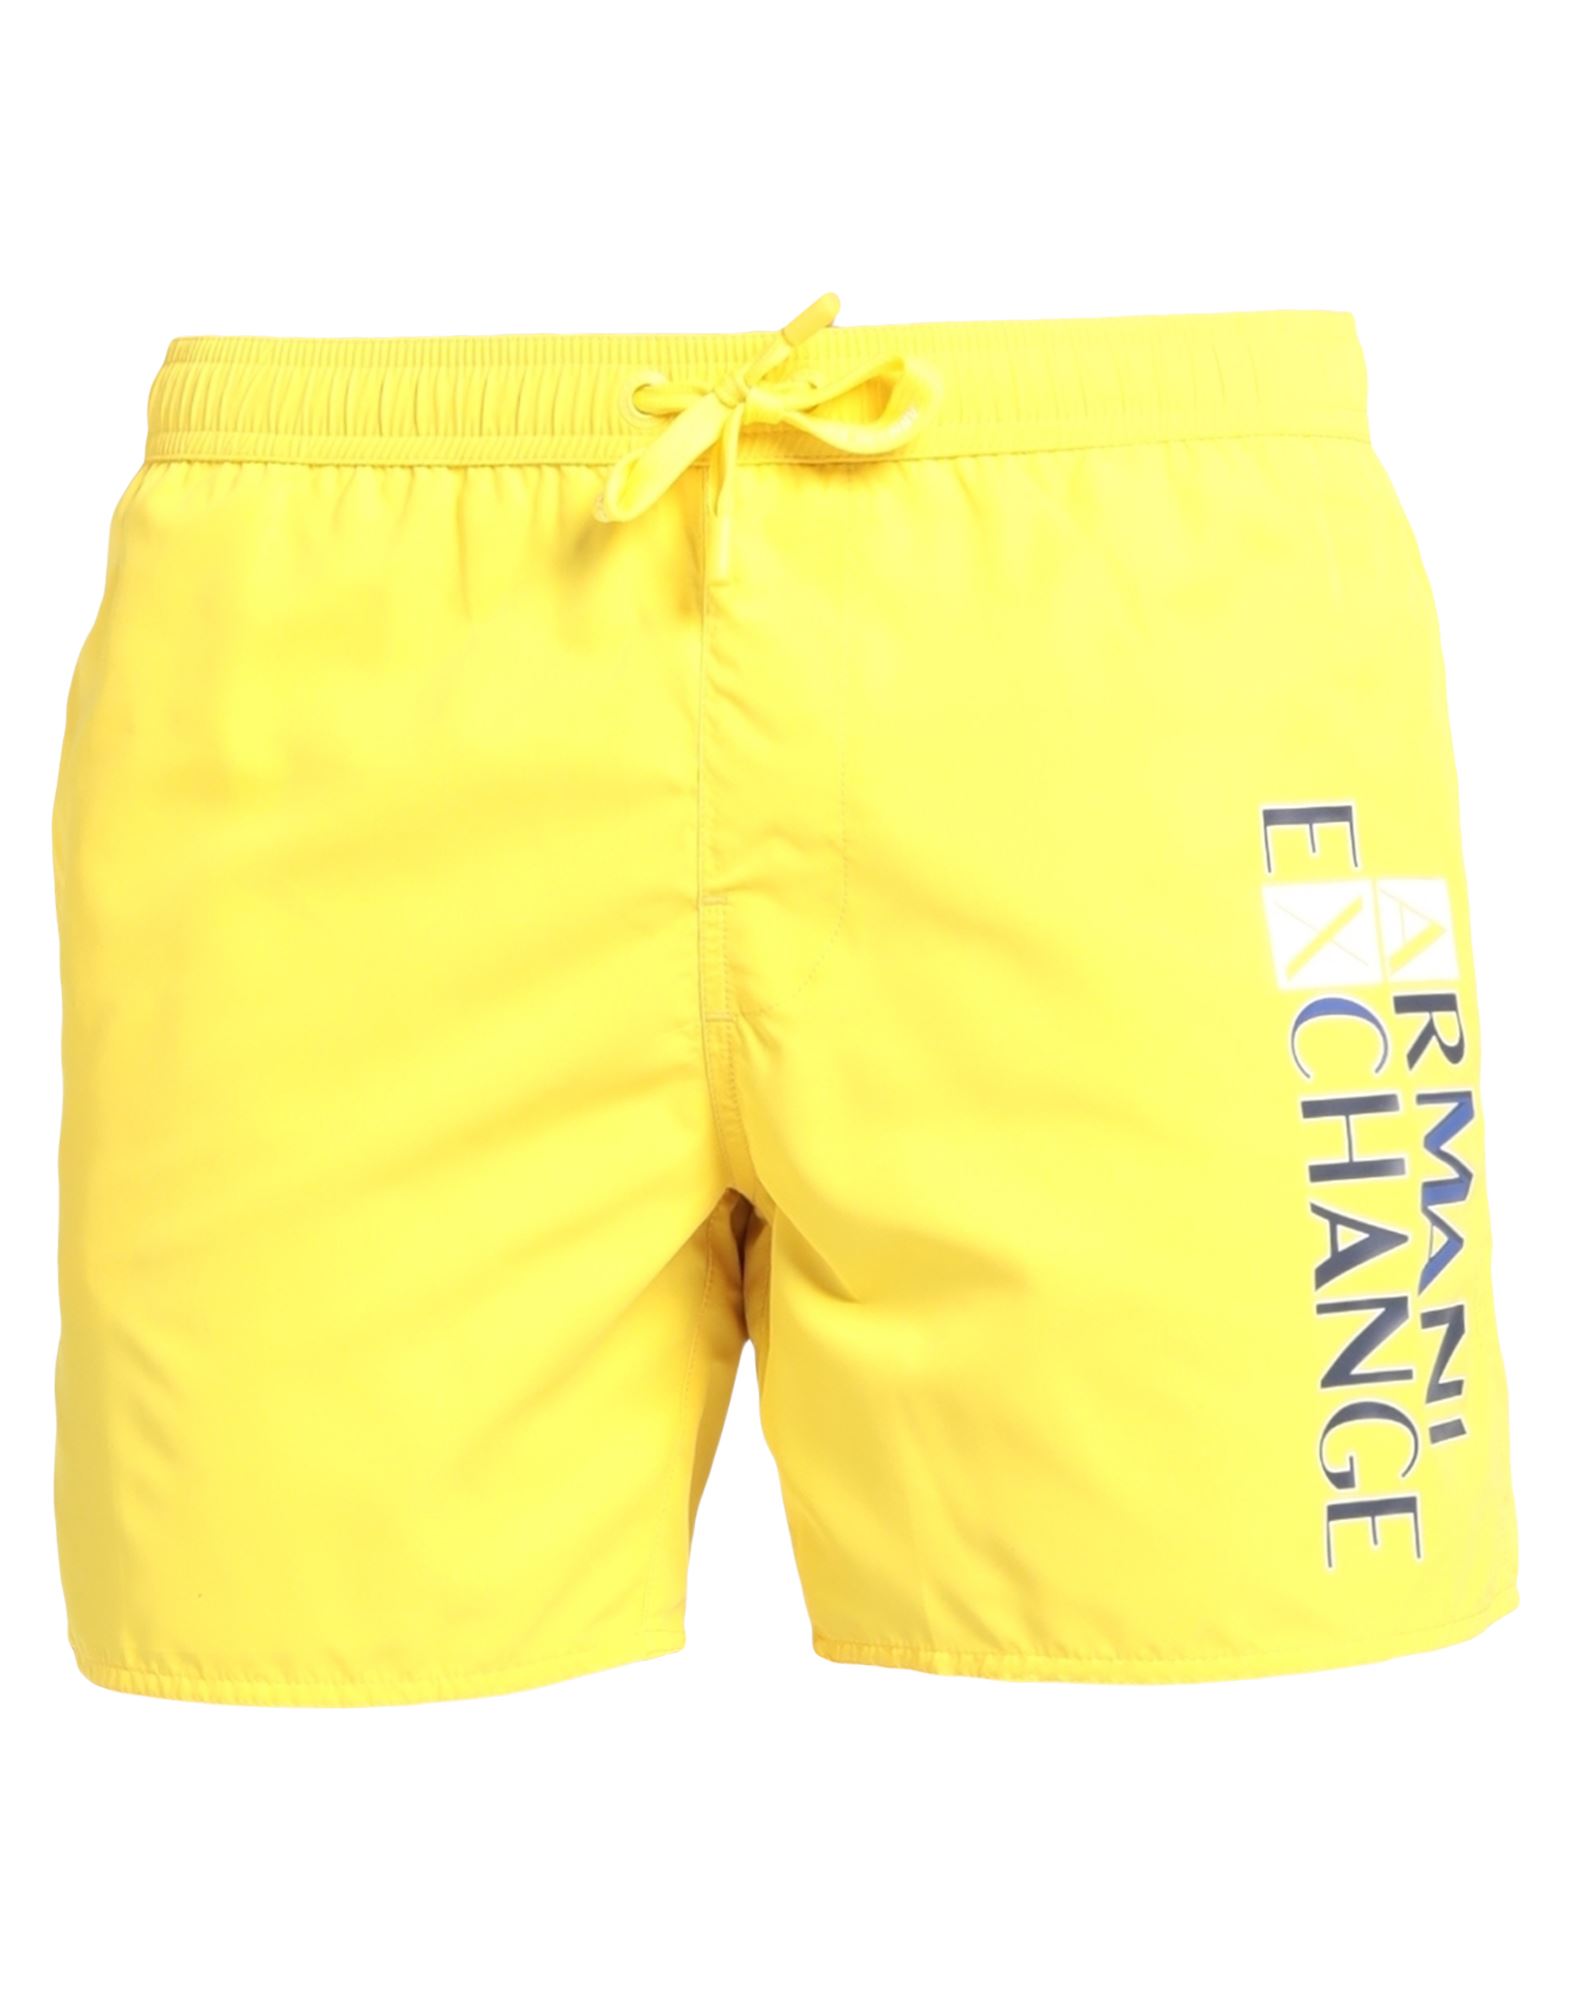 Armani Exchange Swim Trunks In Yellow